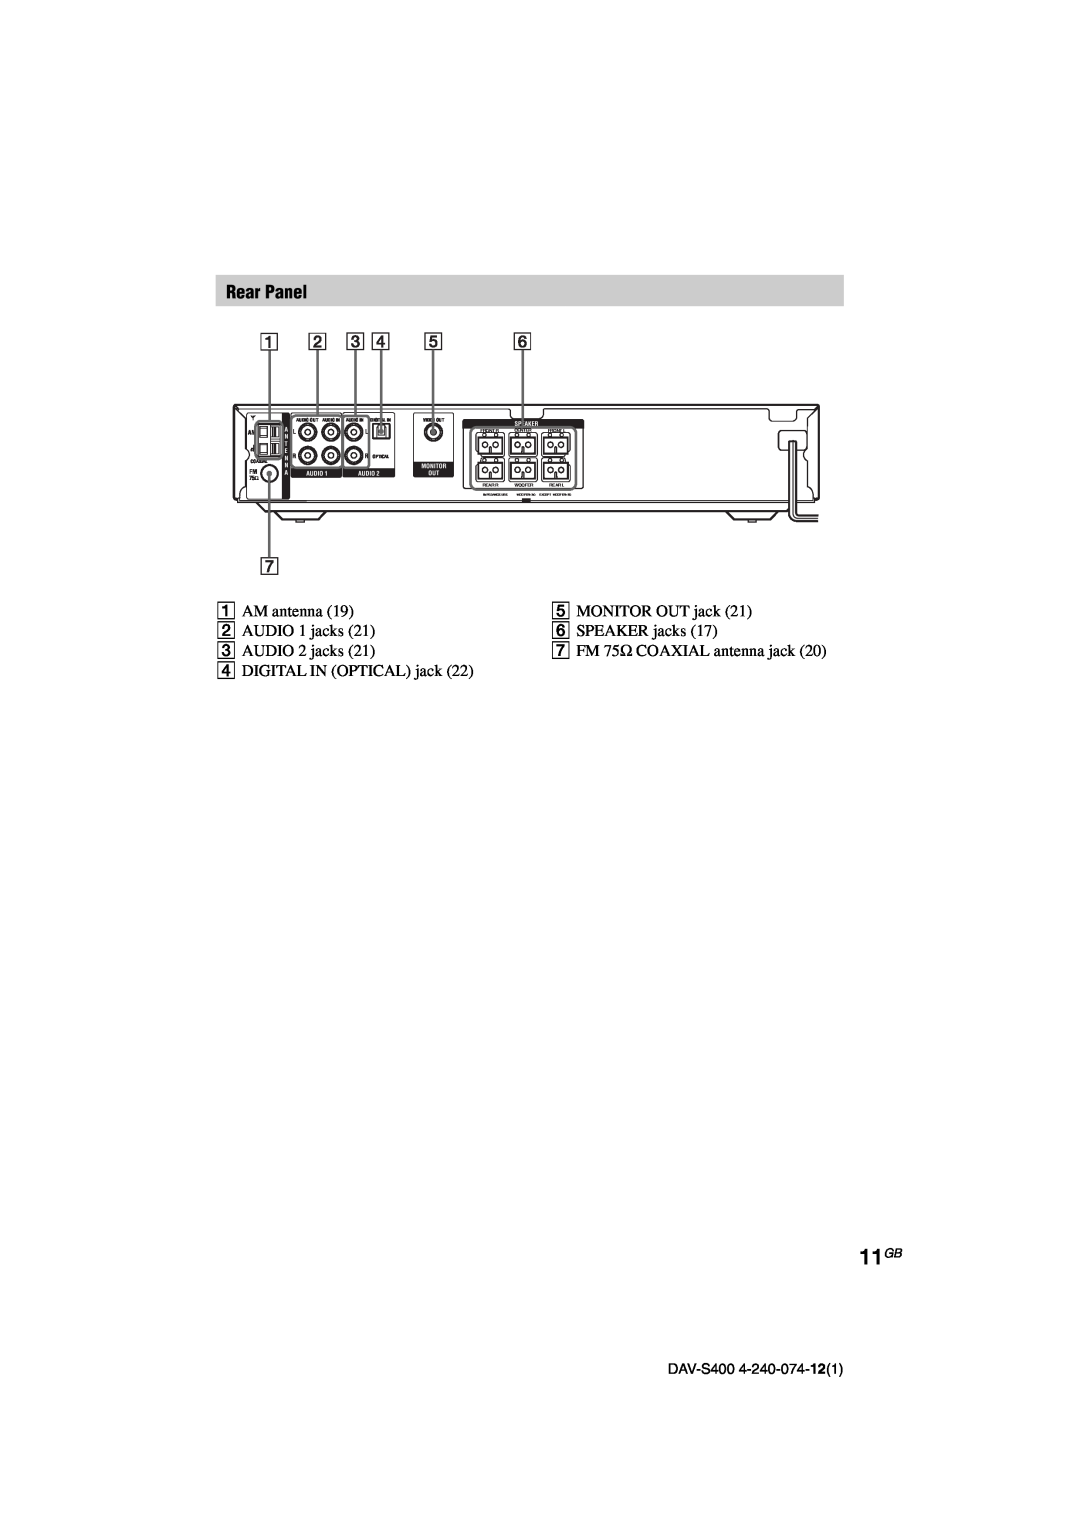 Sony DAV-S400 manual 11GB, Rear Panel, Audio 